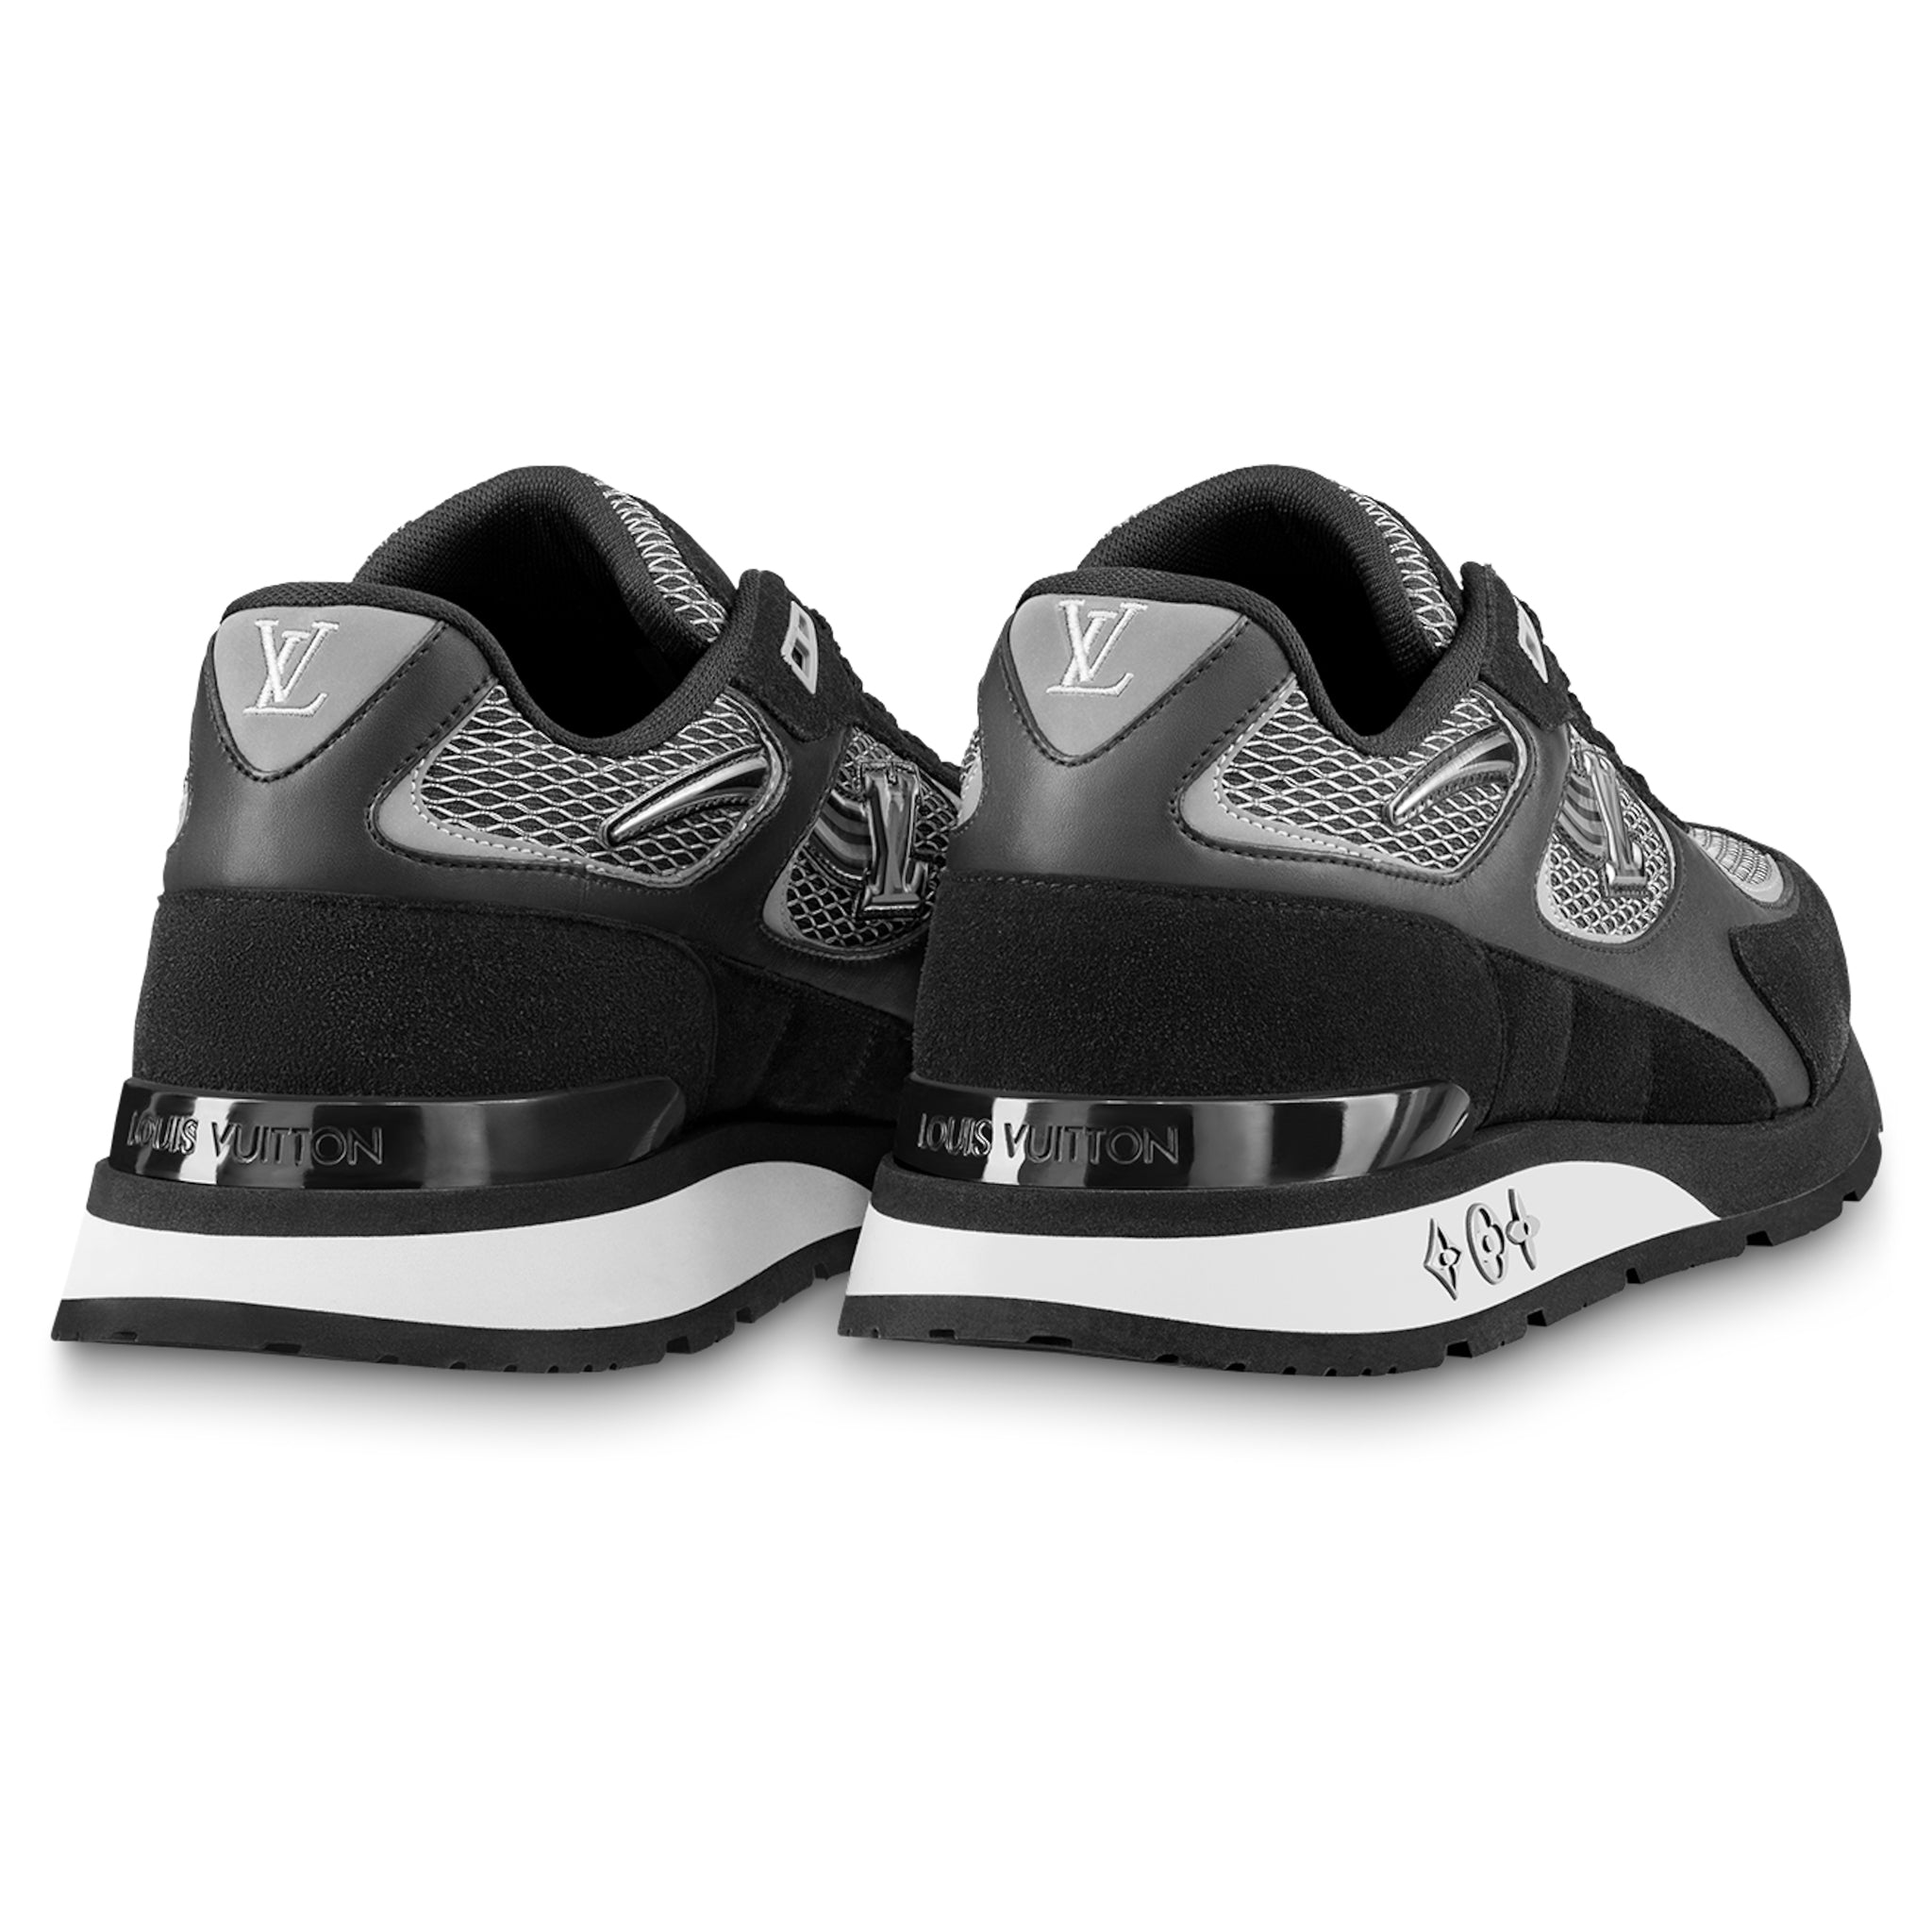 Back view of Louis Vuitton LV Run Away Black Sneaker NVPROD3150014V